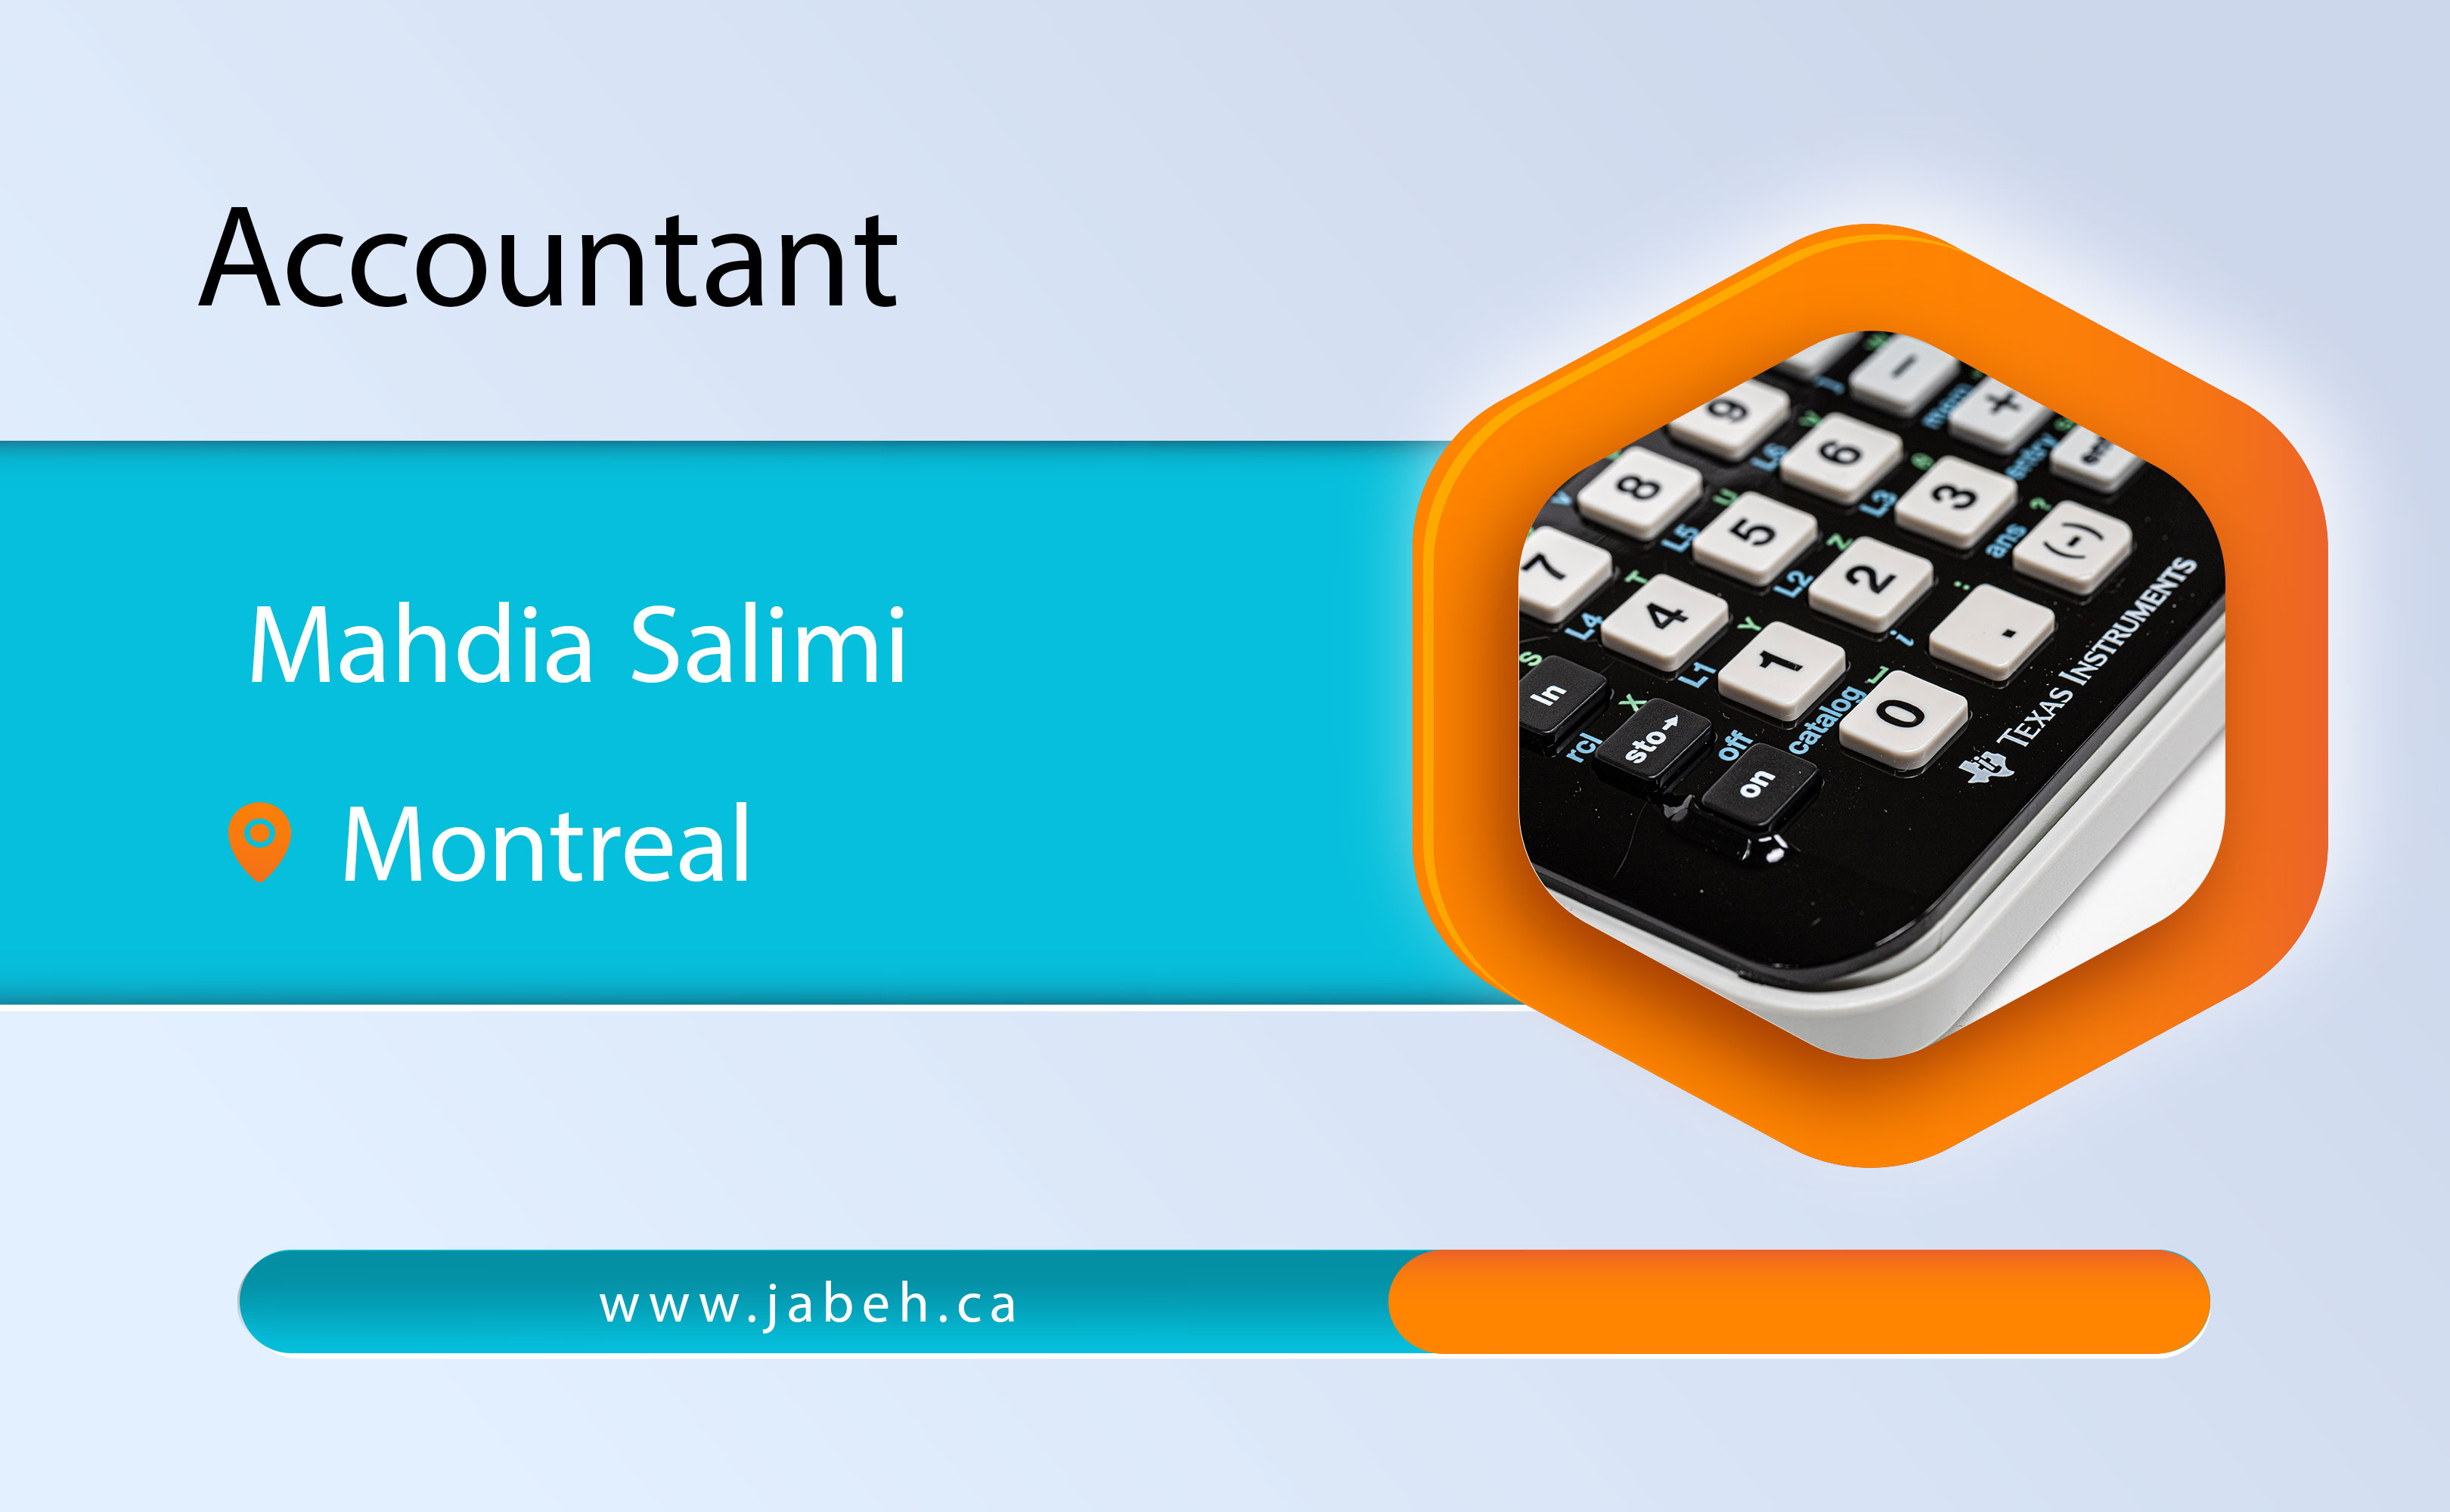 Accounting expert Mahdia Salimi in Montreal